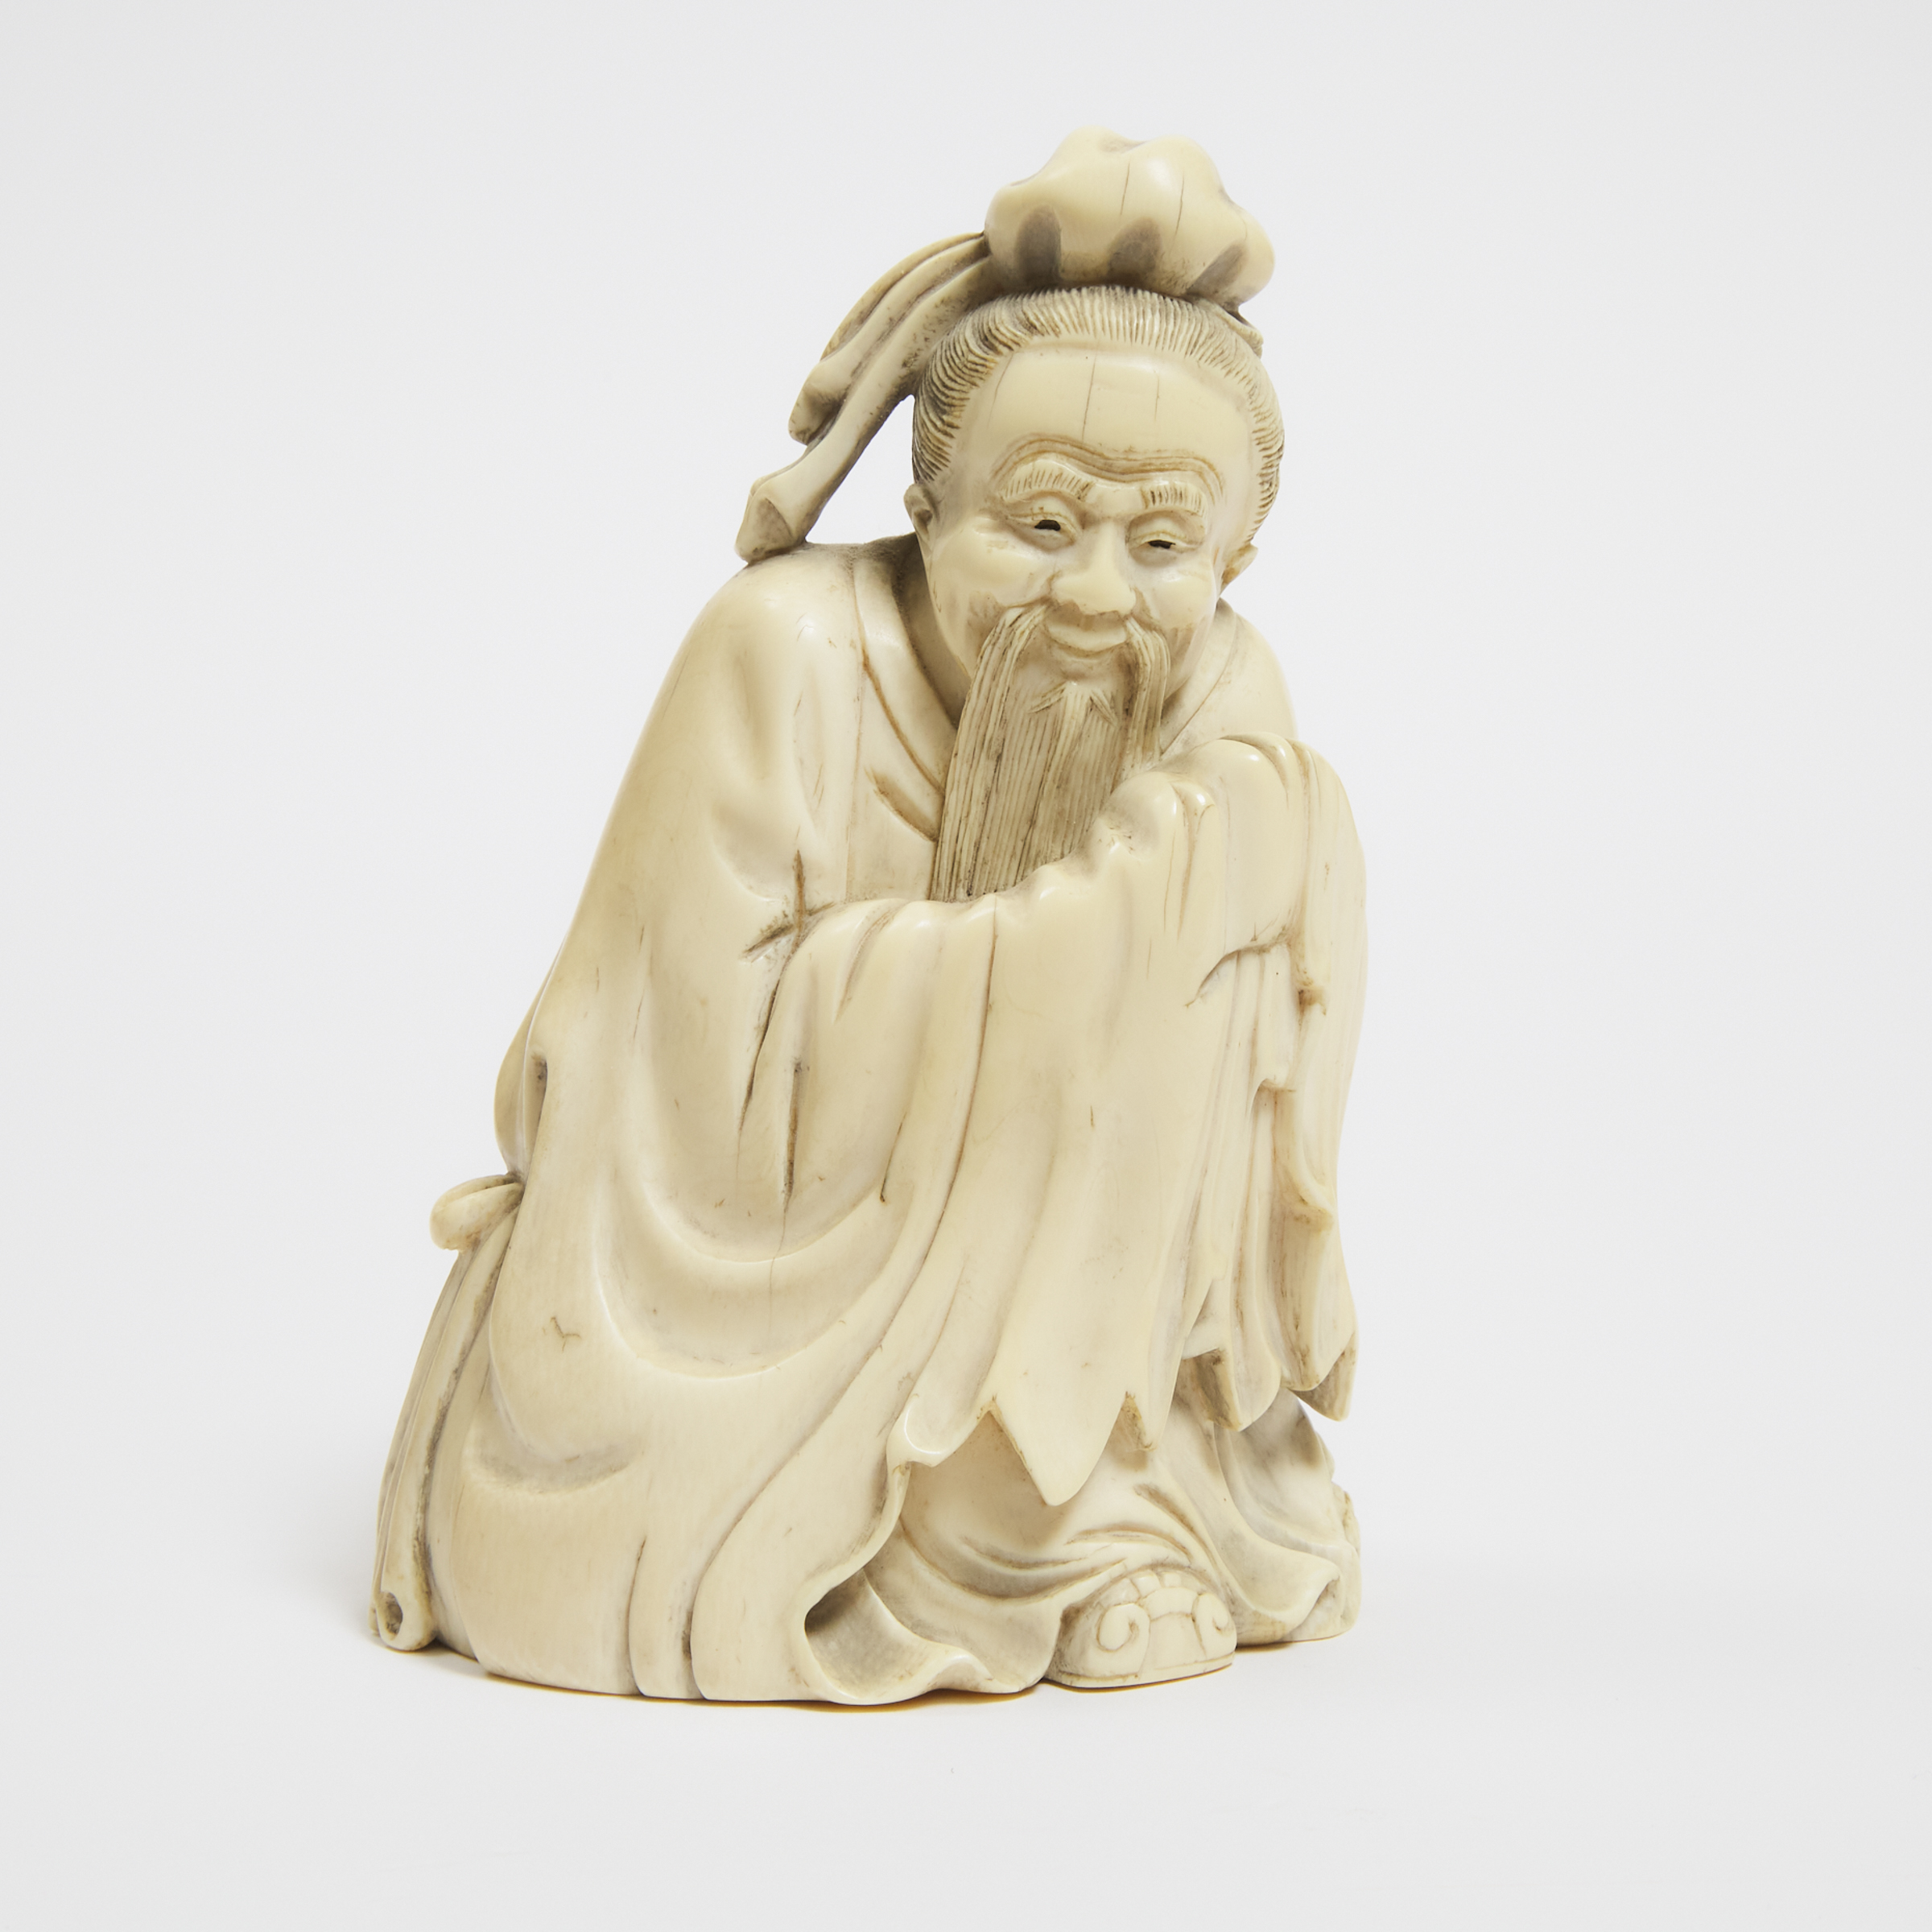 An Ivory Figure of the Drunken Poet Li Bai, Early to Mid 20th Century